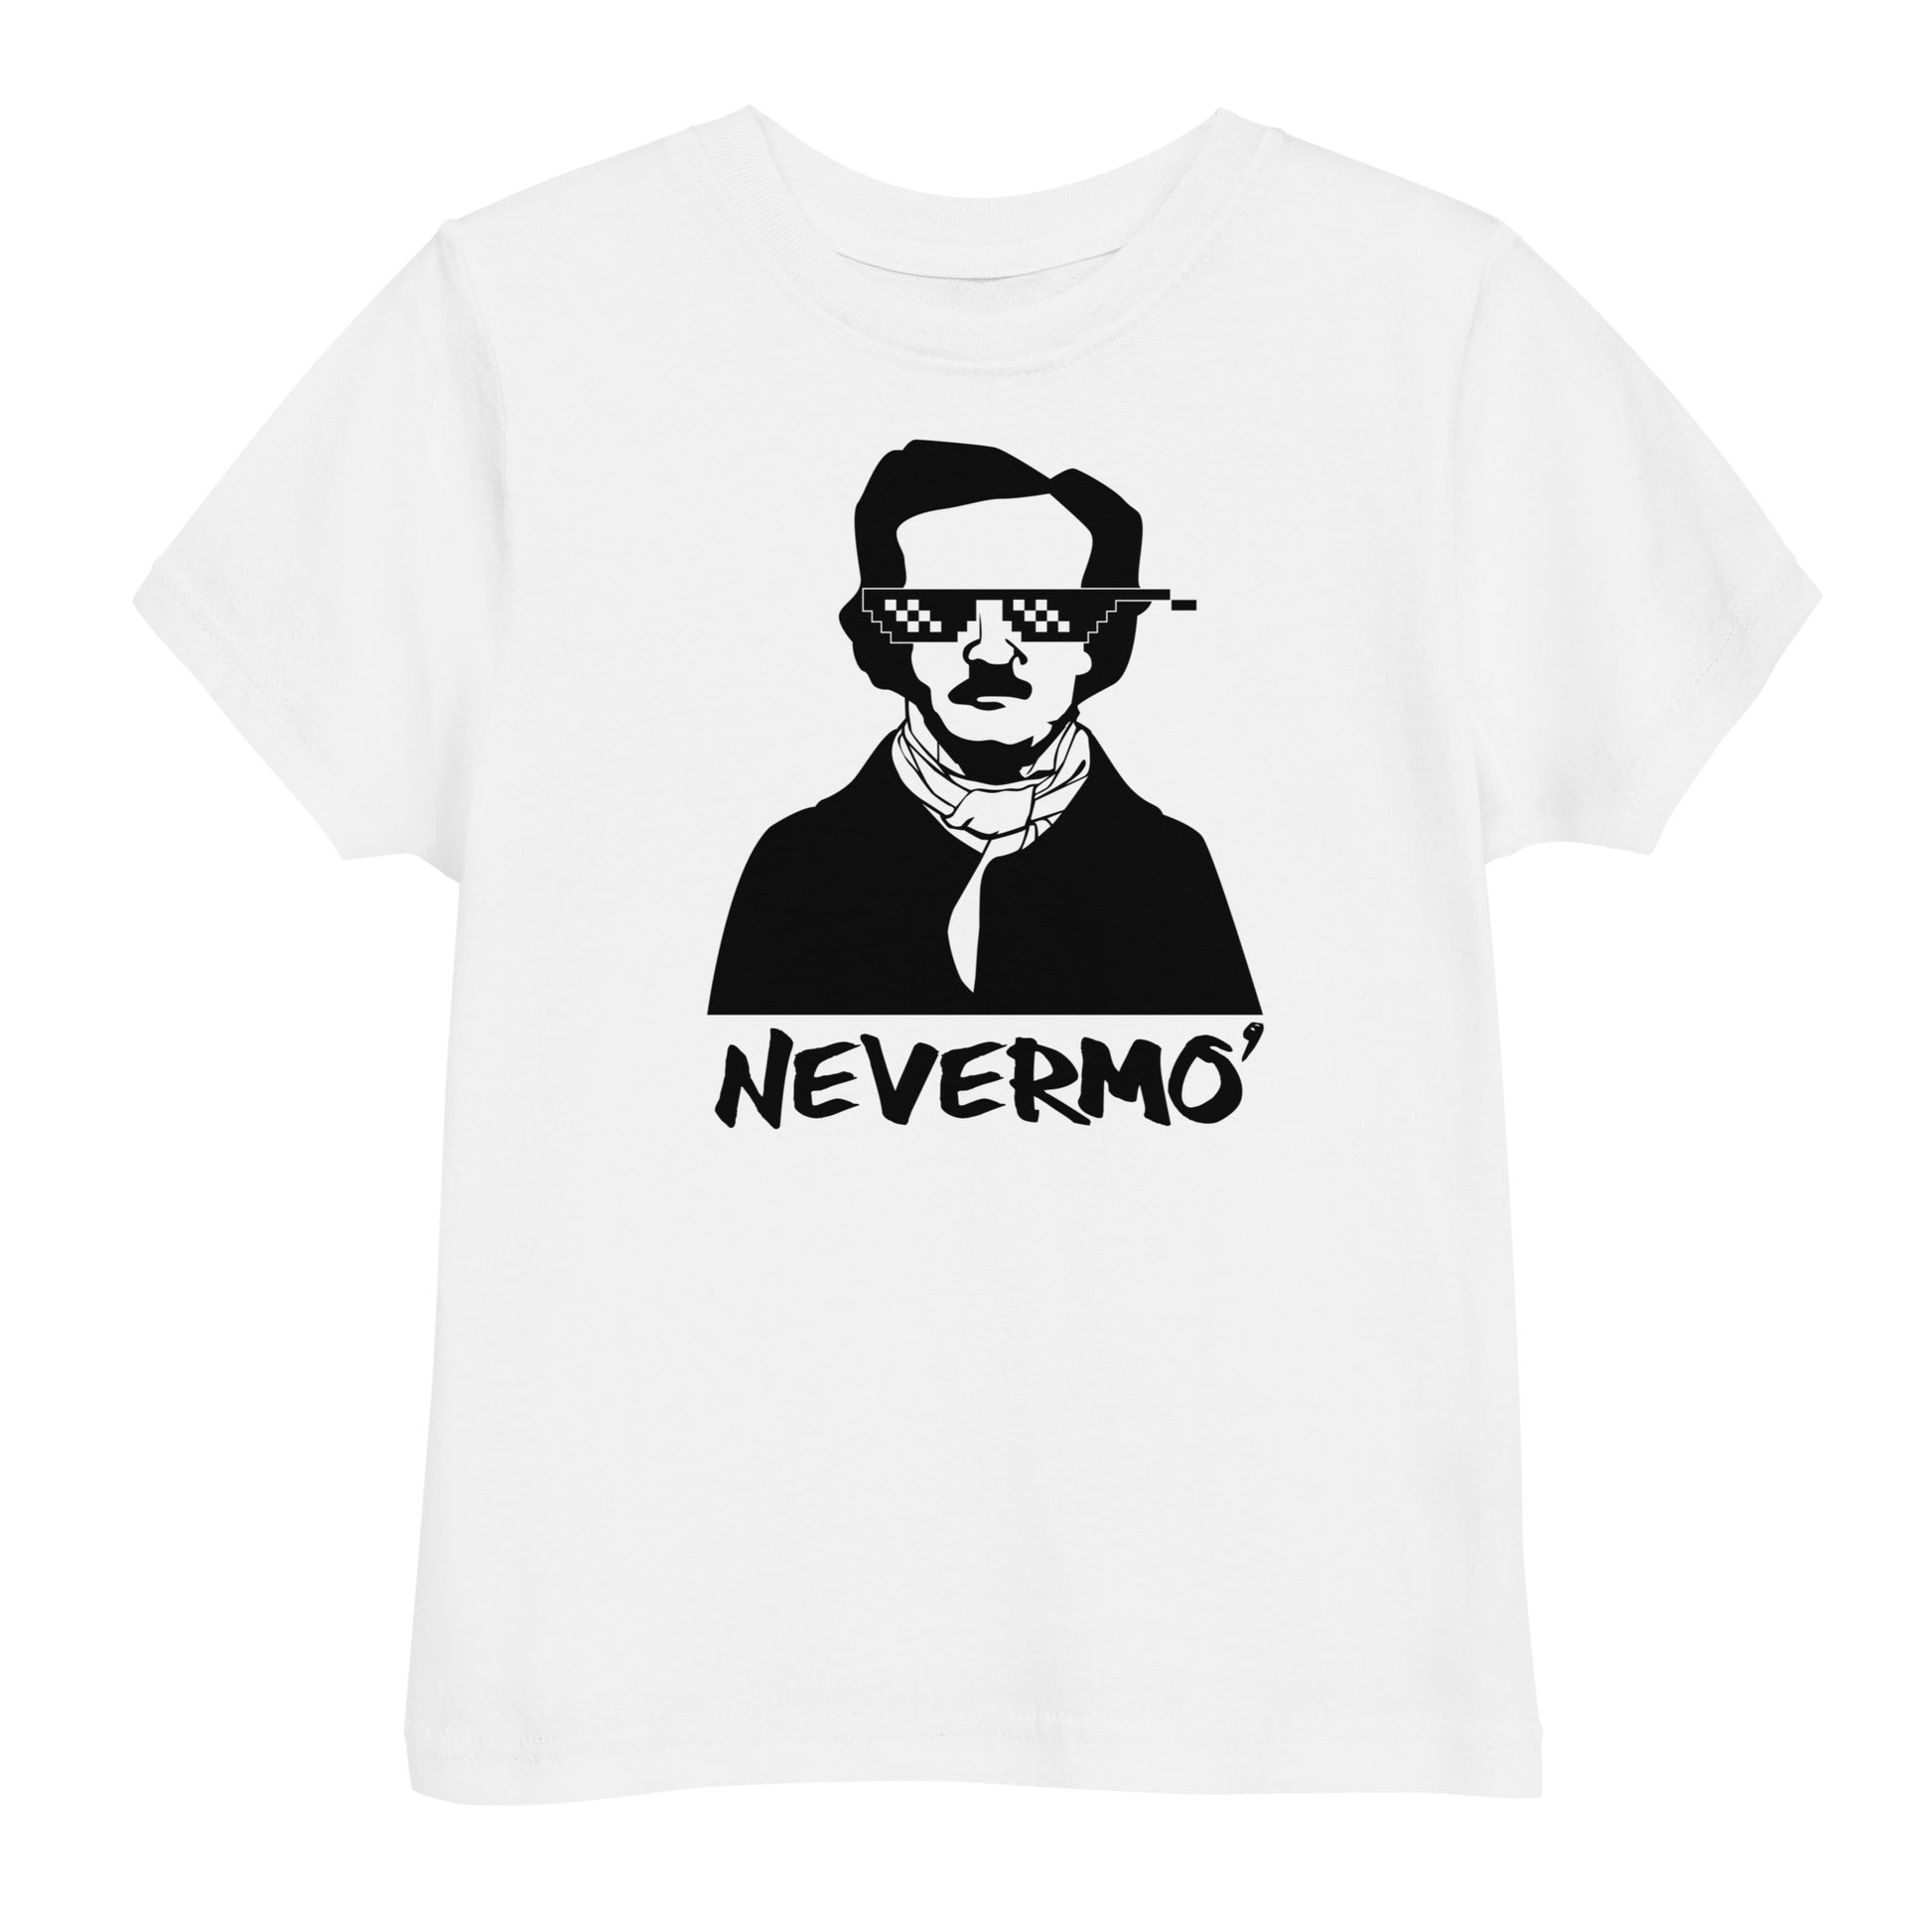 Toddler Edgar Allan Poe "Nevermo" jersey t-shirt - White Front